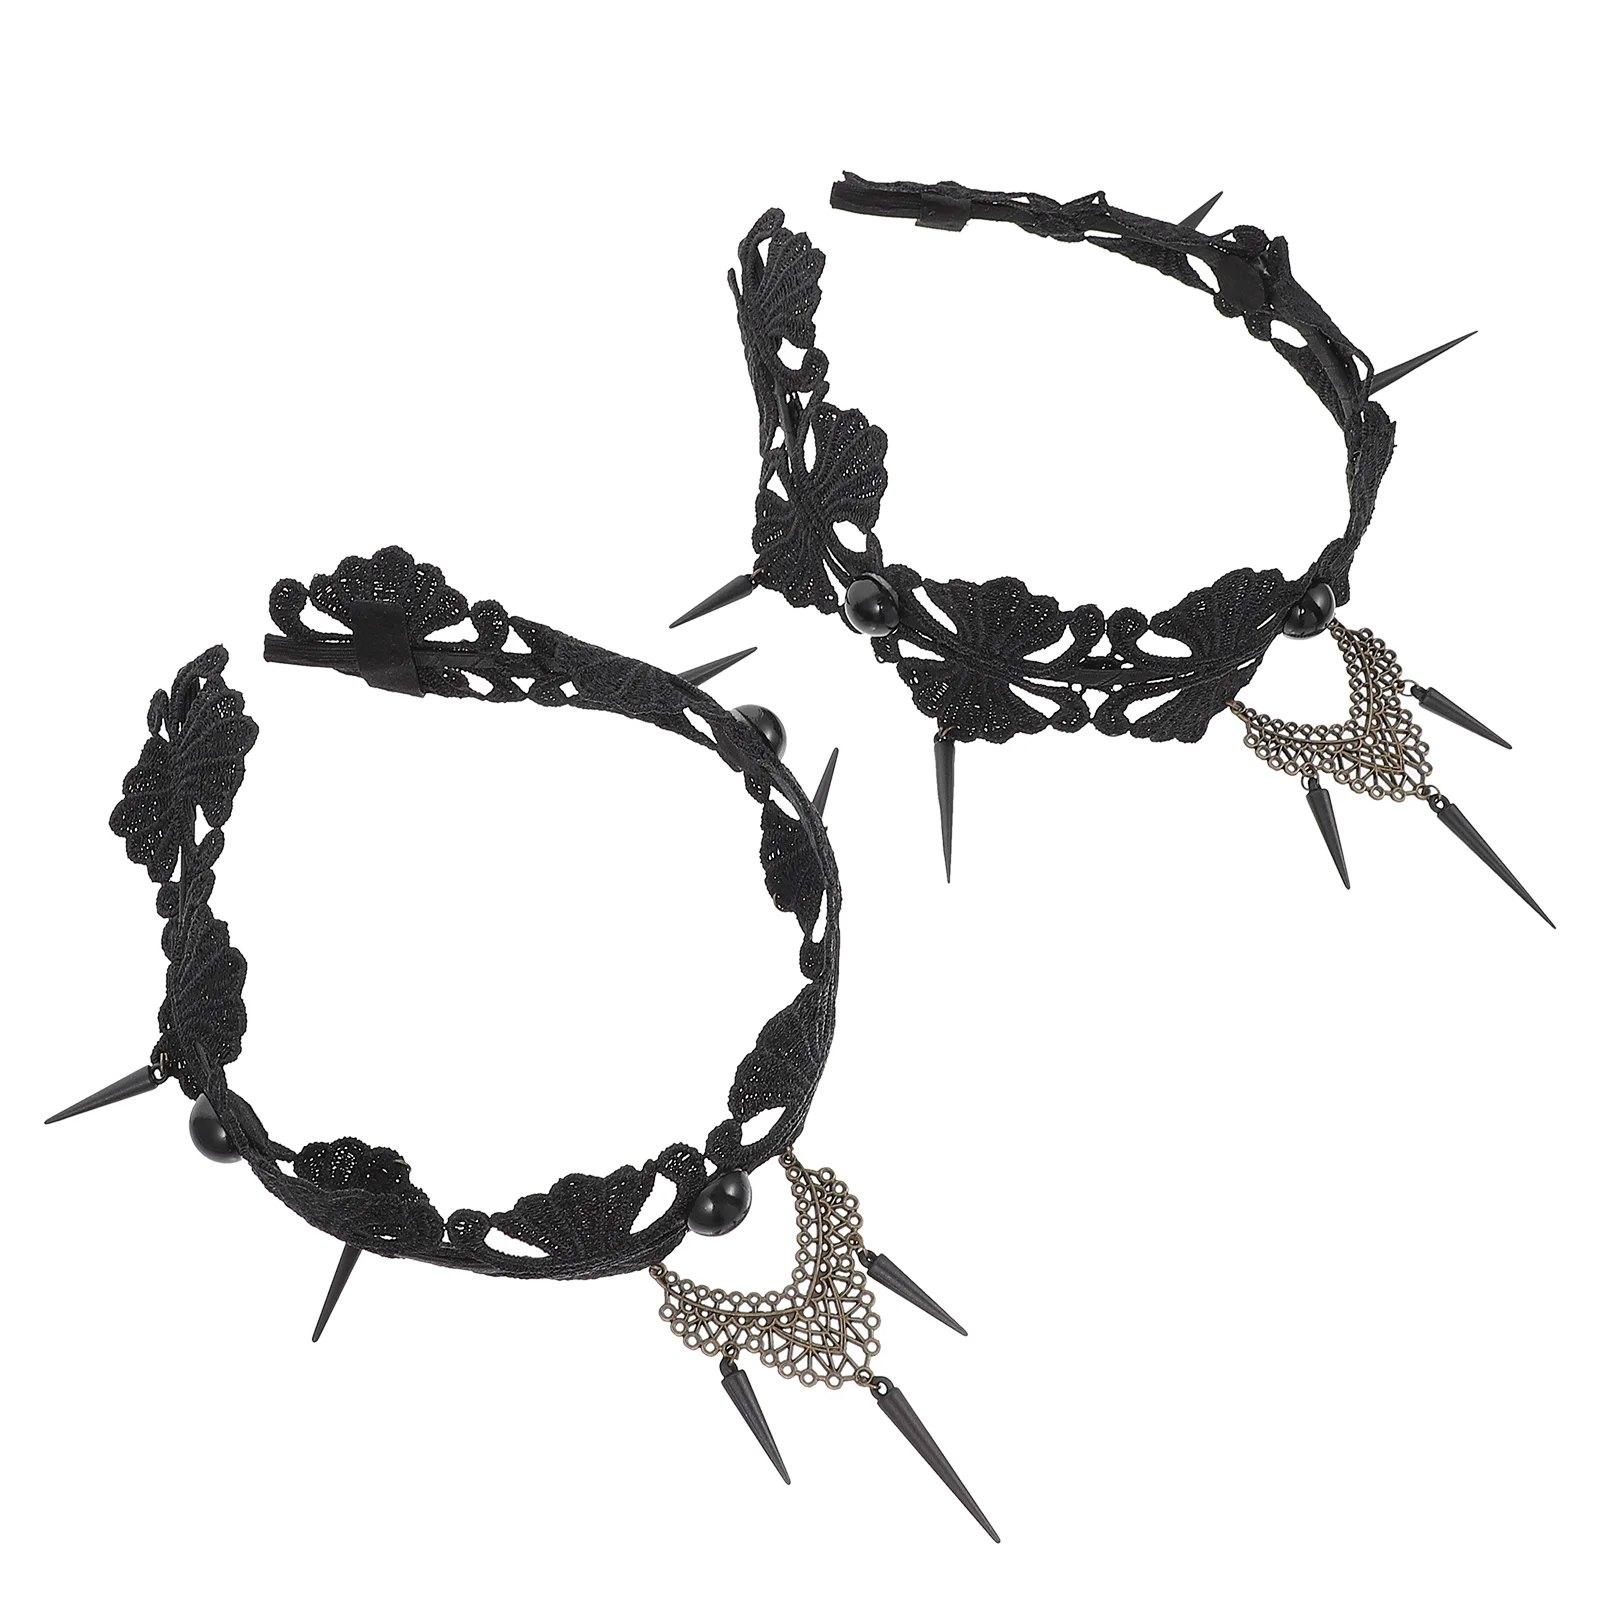 

Halloween Headband Headbands Headpiece Black Accessories Lace Lolita Gothic Hair Kids Cosplay Hoop Party Headdress Costume